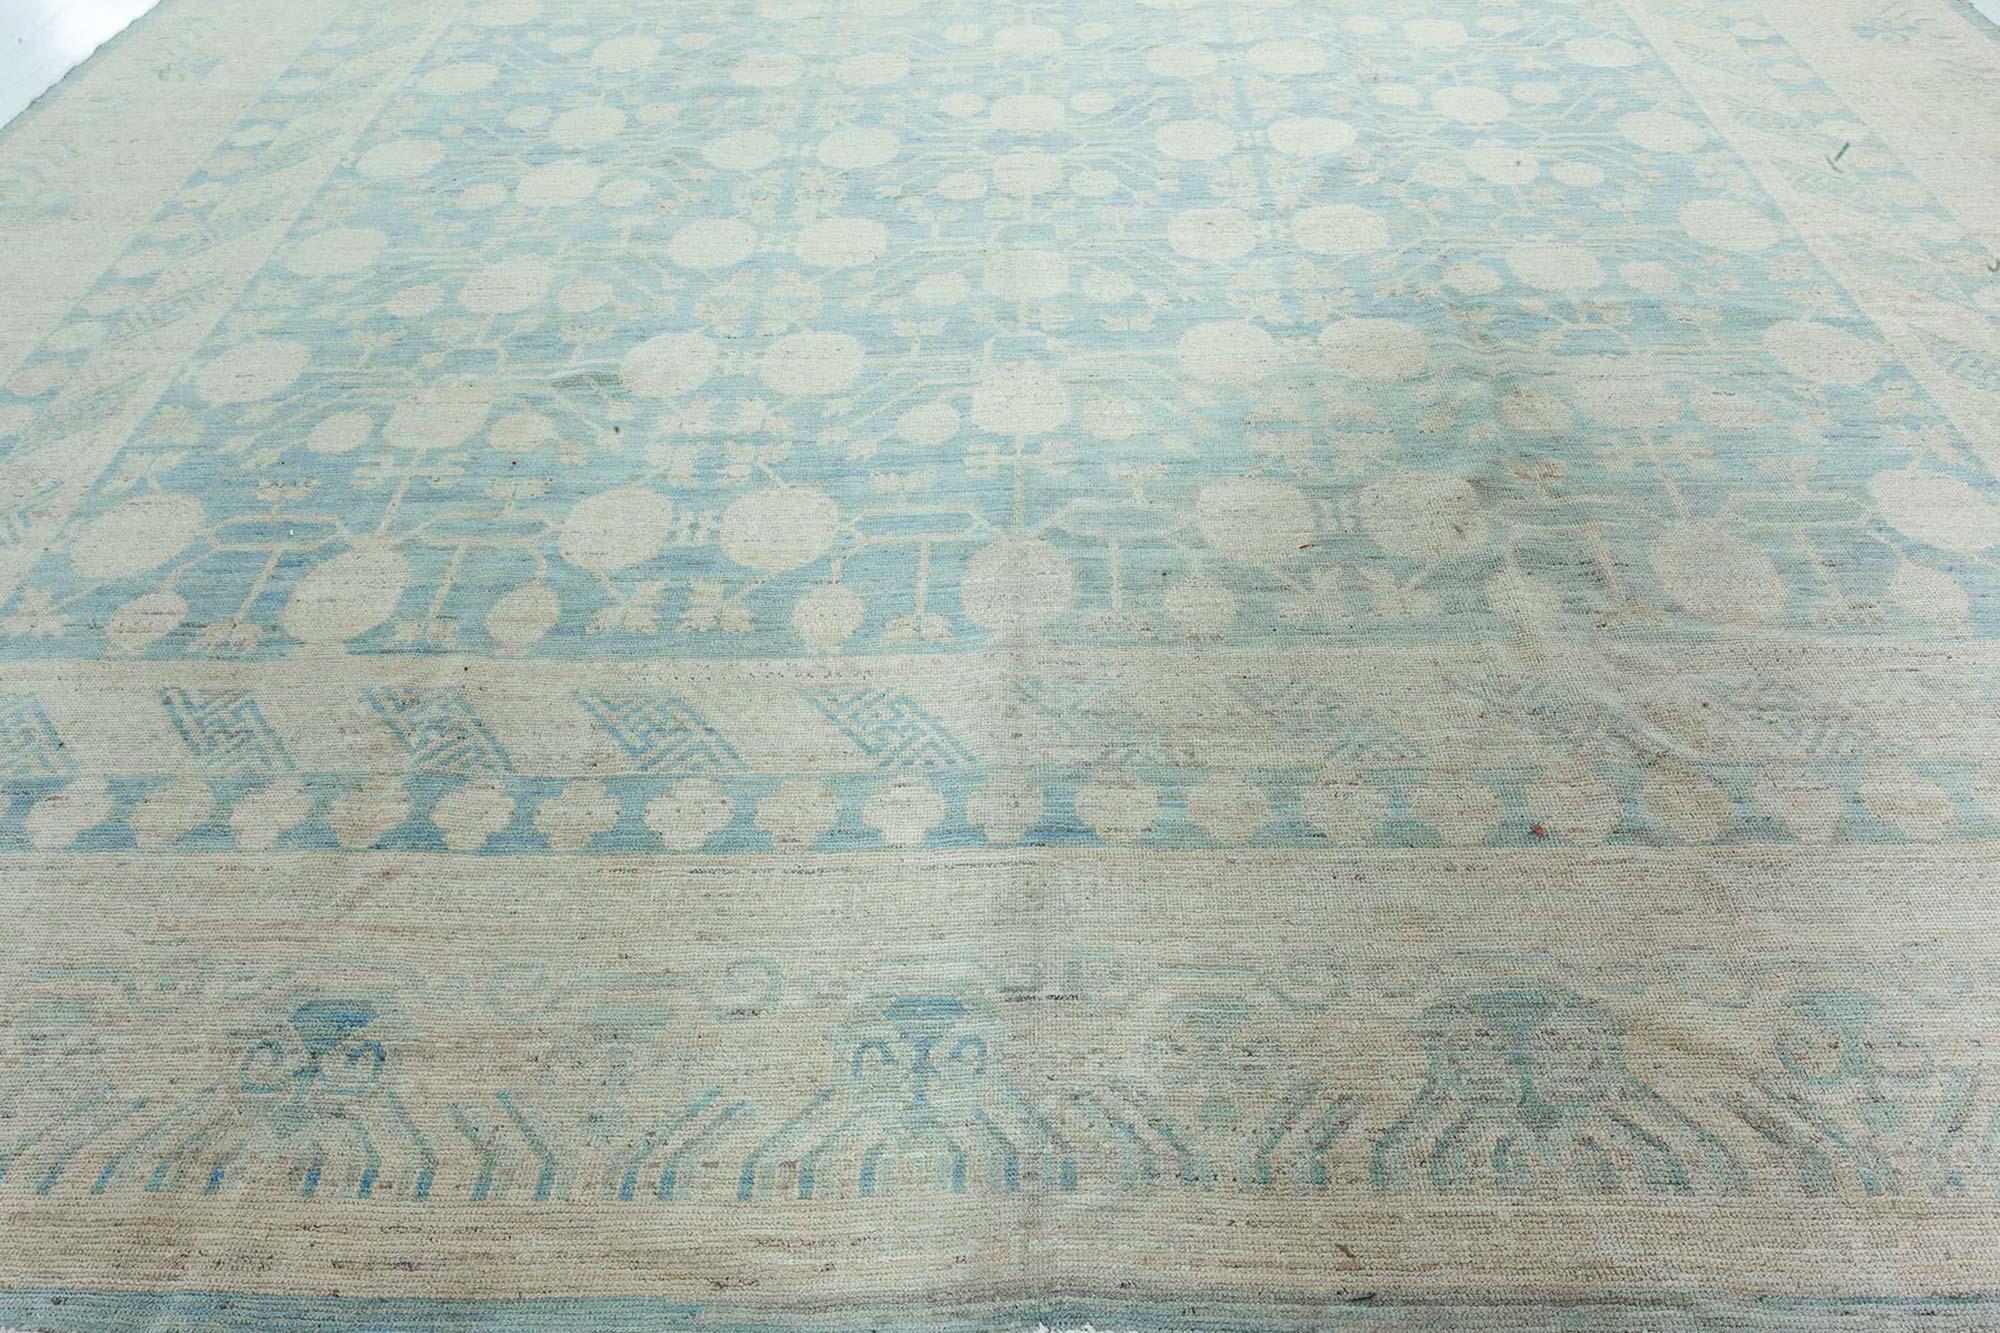 Contemporary Samarkand handmade wool rug by Doris Leslie Blau.
Size: 12.8